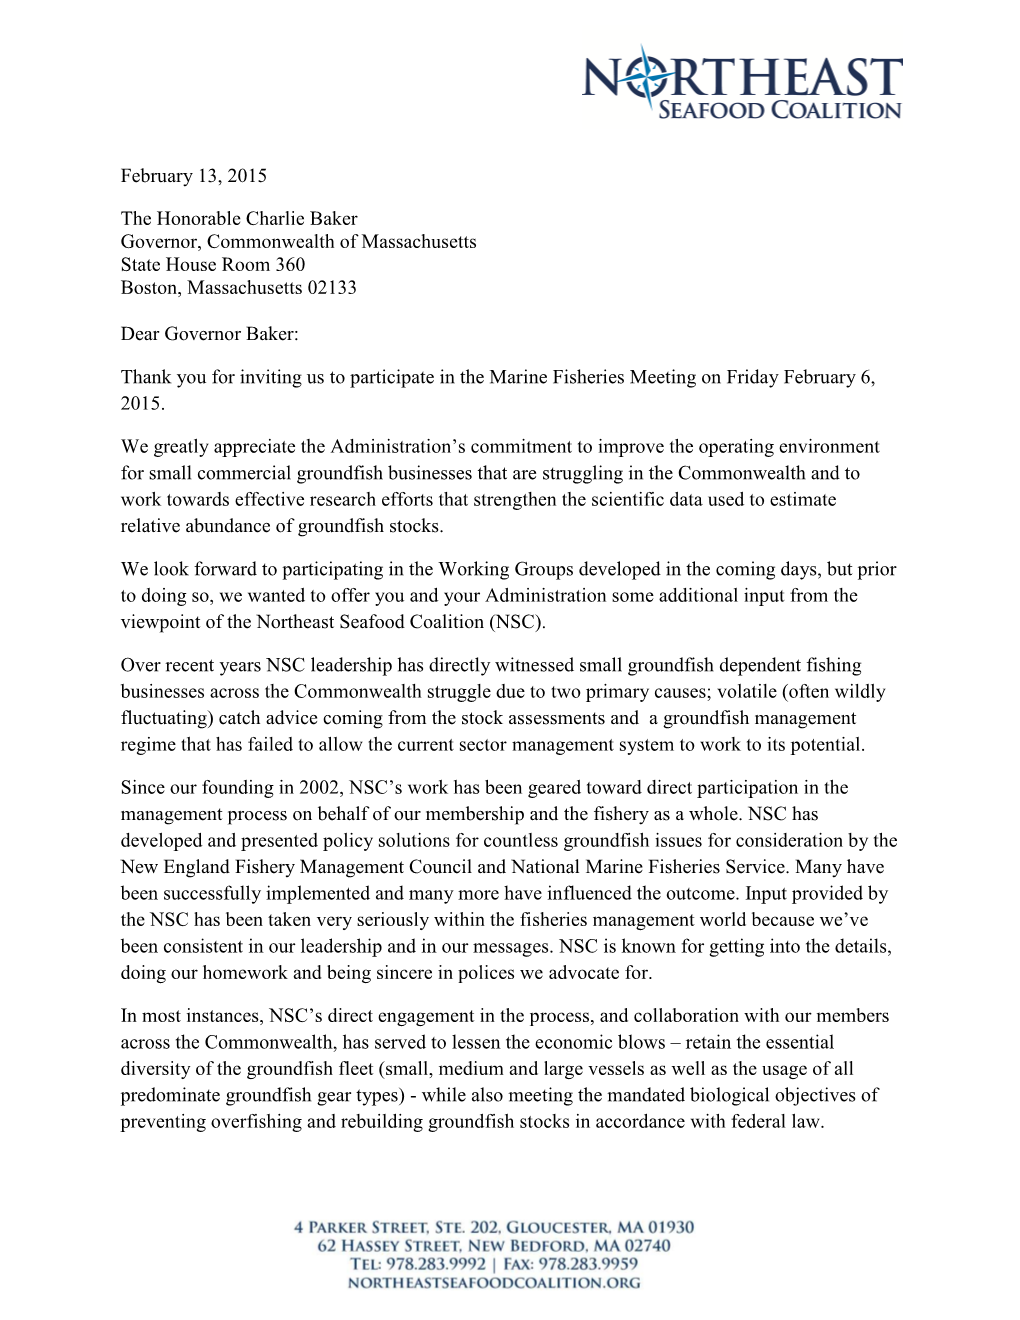 NSC Letter to Governor Baker Feb 13 2015